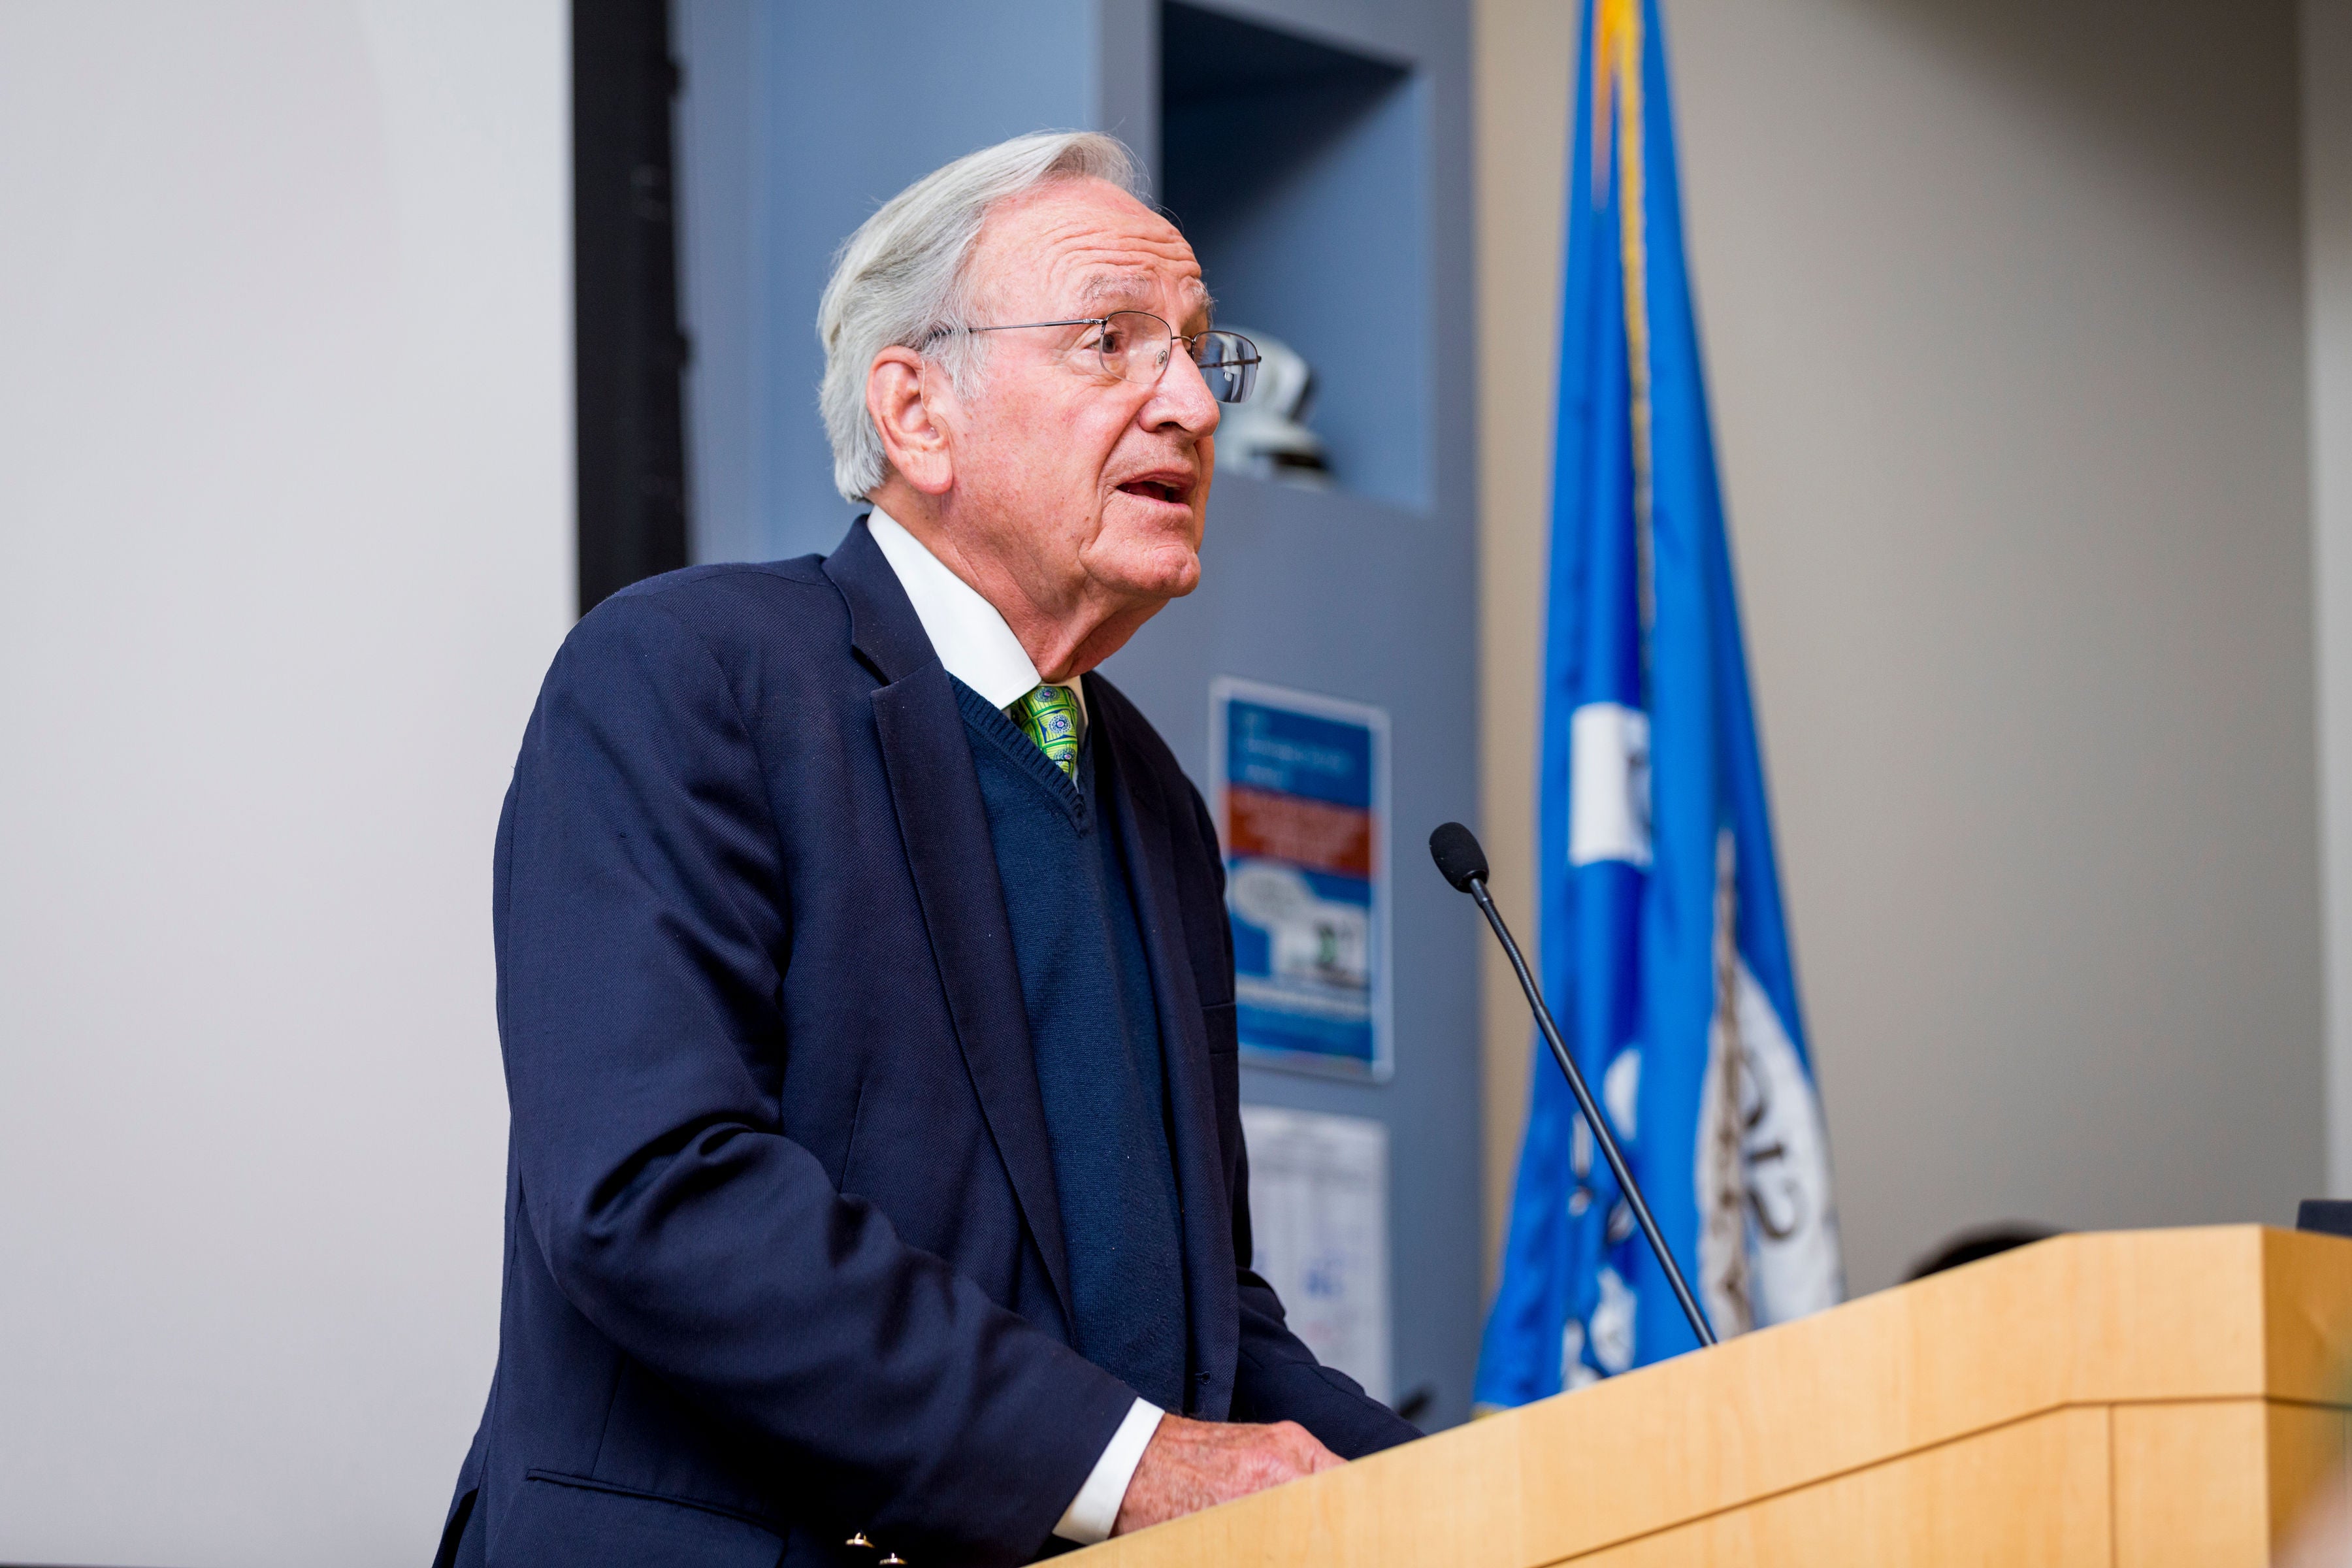 Jean Mayer Prize recipient Tom Harkin speaks at the October 2018 event